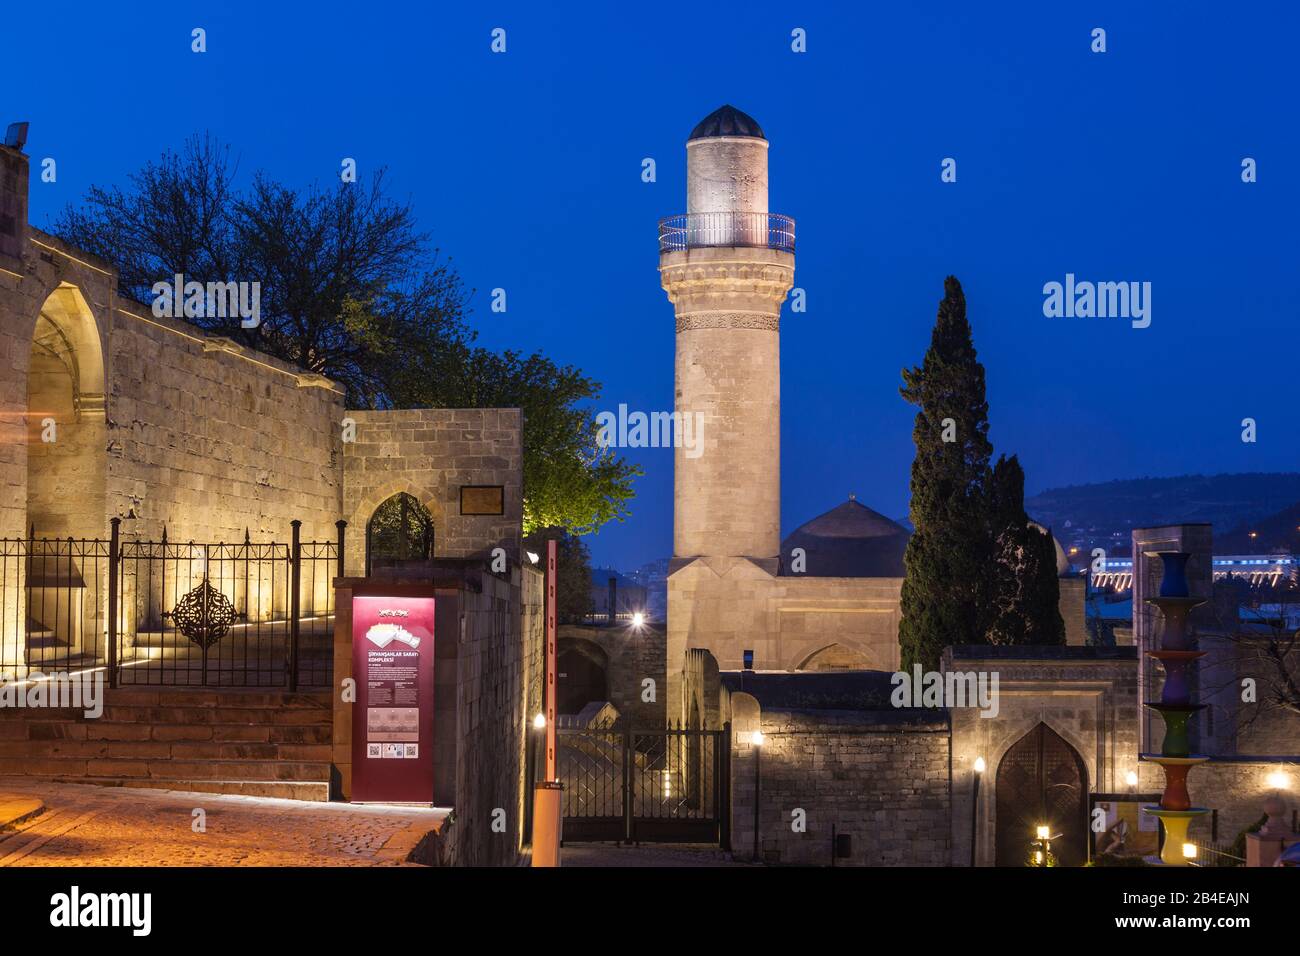 Azerbaijan, Baku, Old City, Palace of the Shirvanshahs, dawn Stock Photo